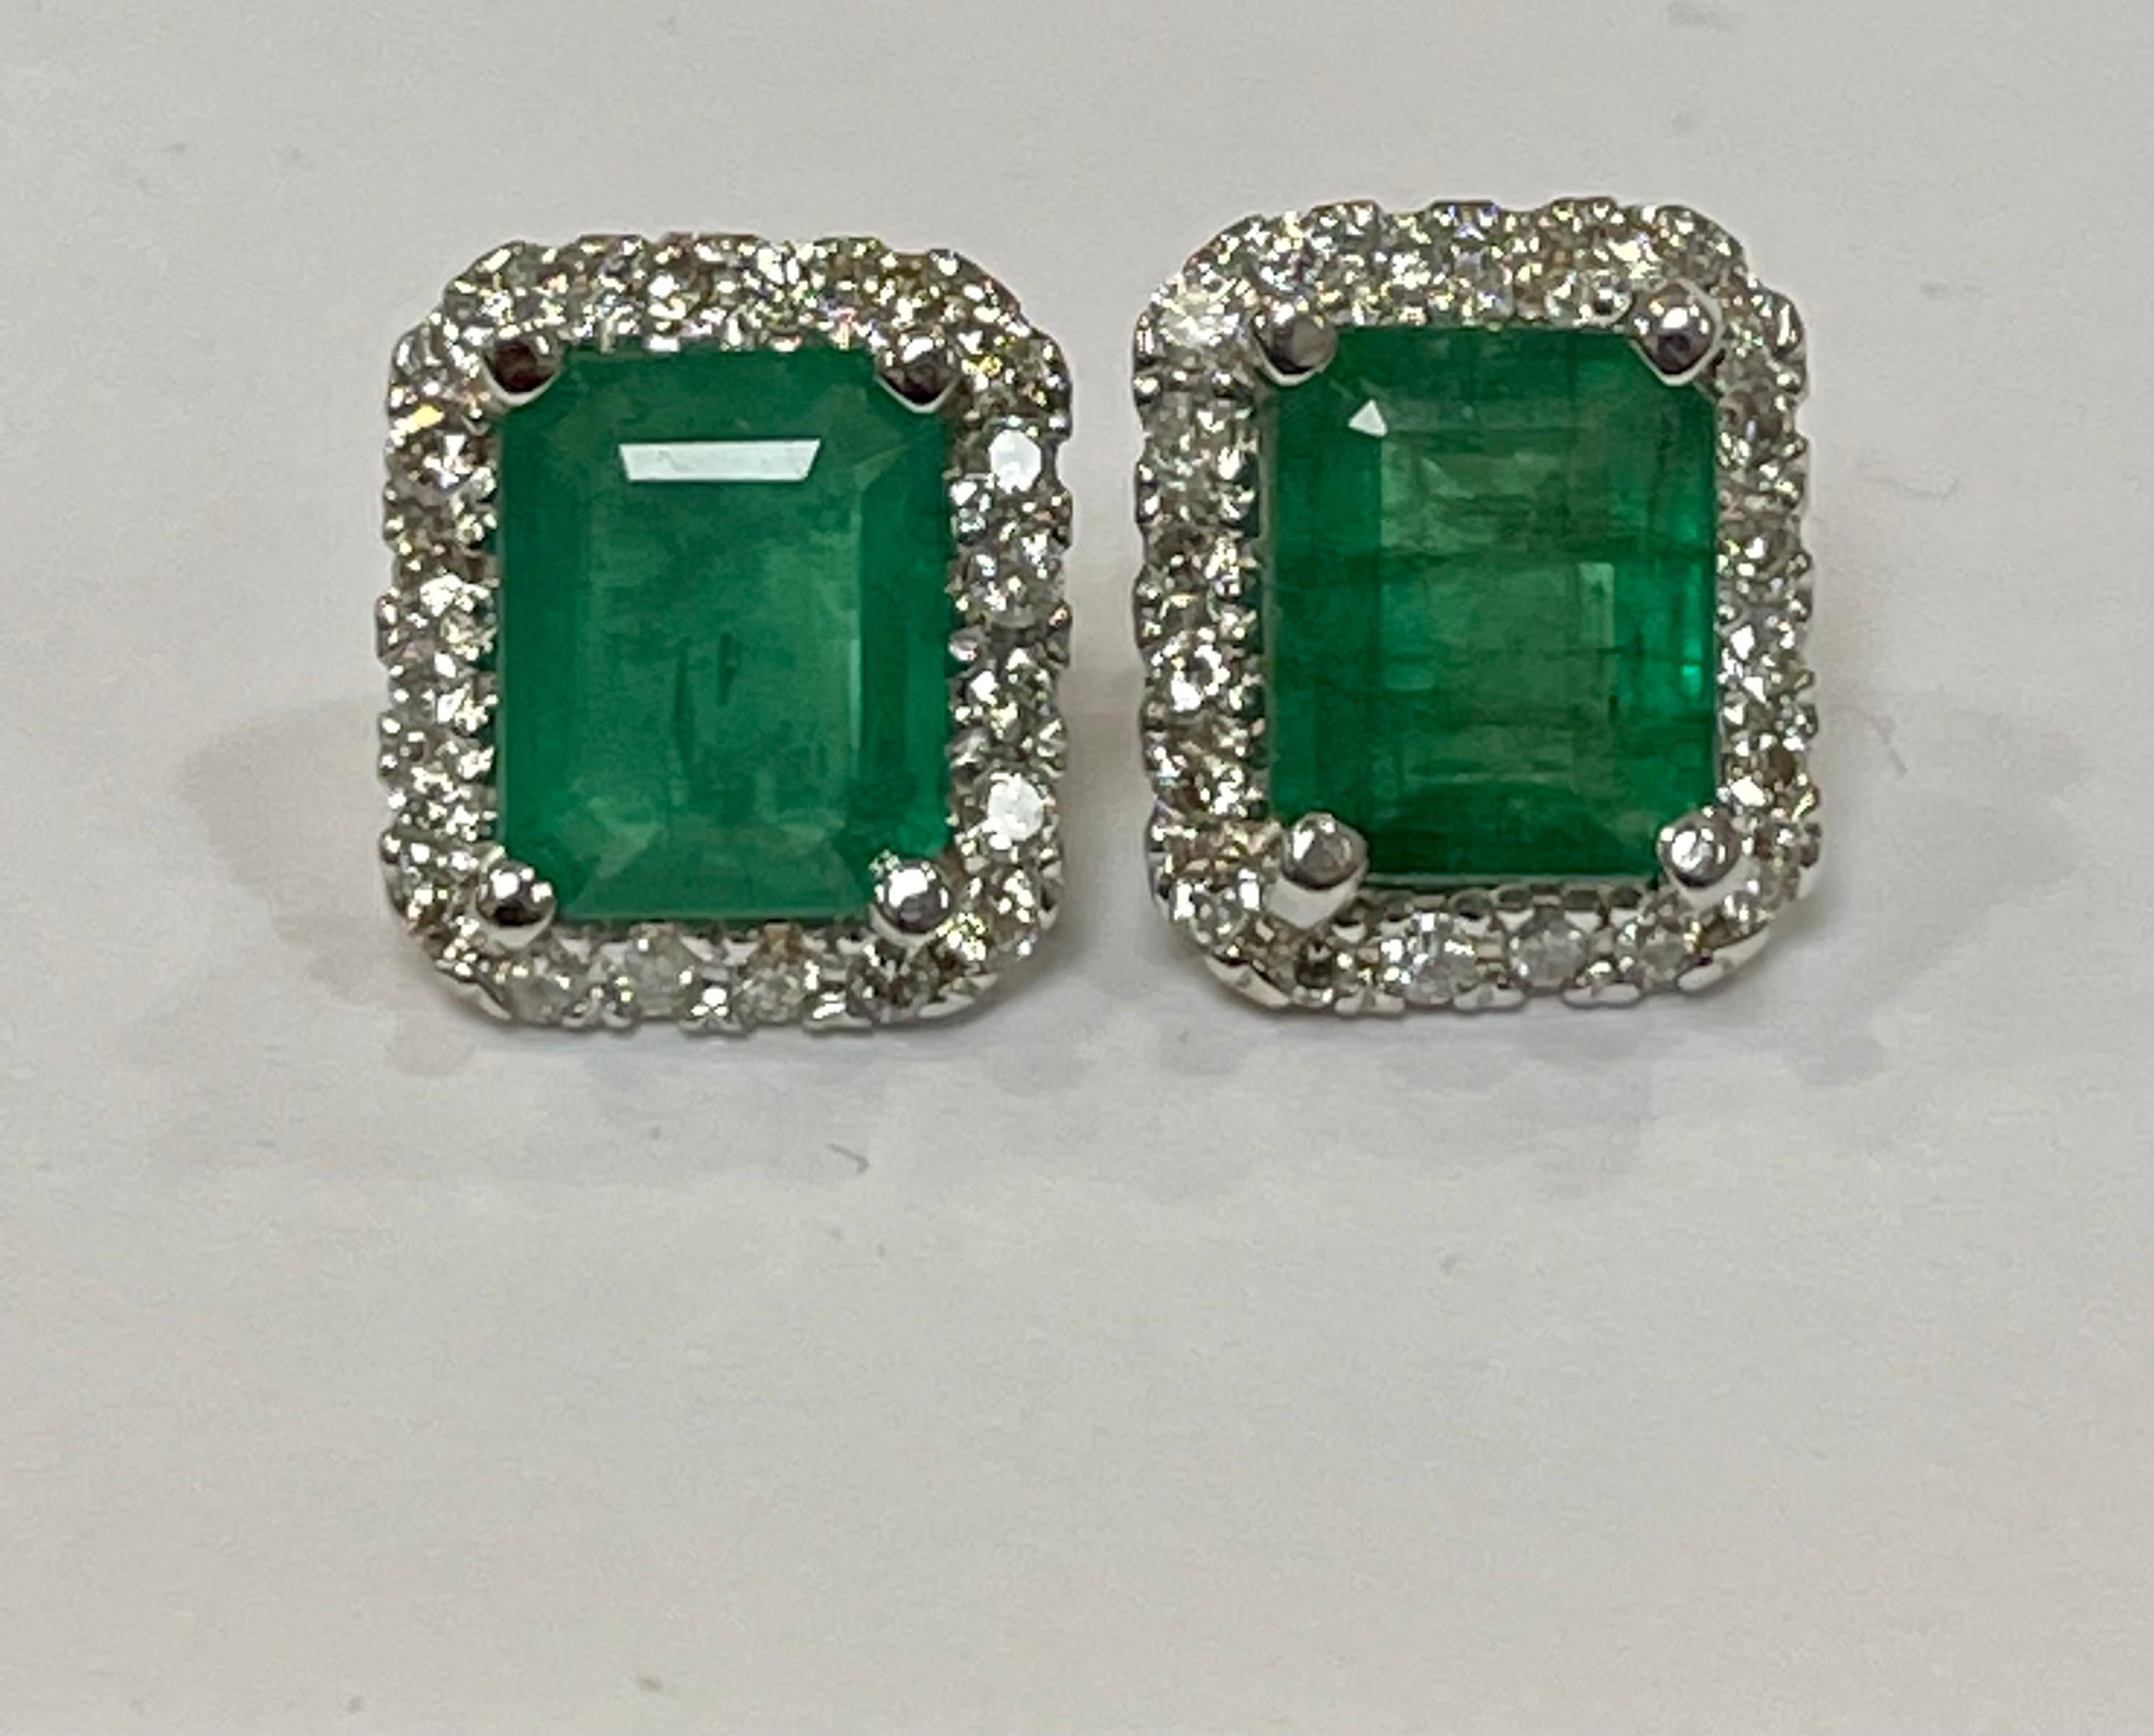 7 Carat Emerald Cut Emerald & 1.5 Ct Diamond Stud Earrings 14 Kt White Gold 6